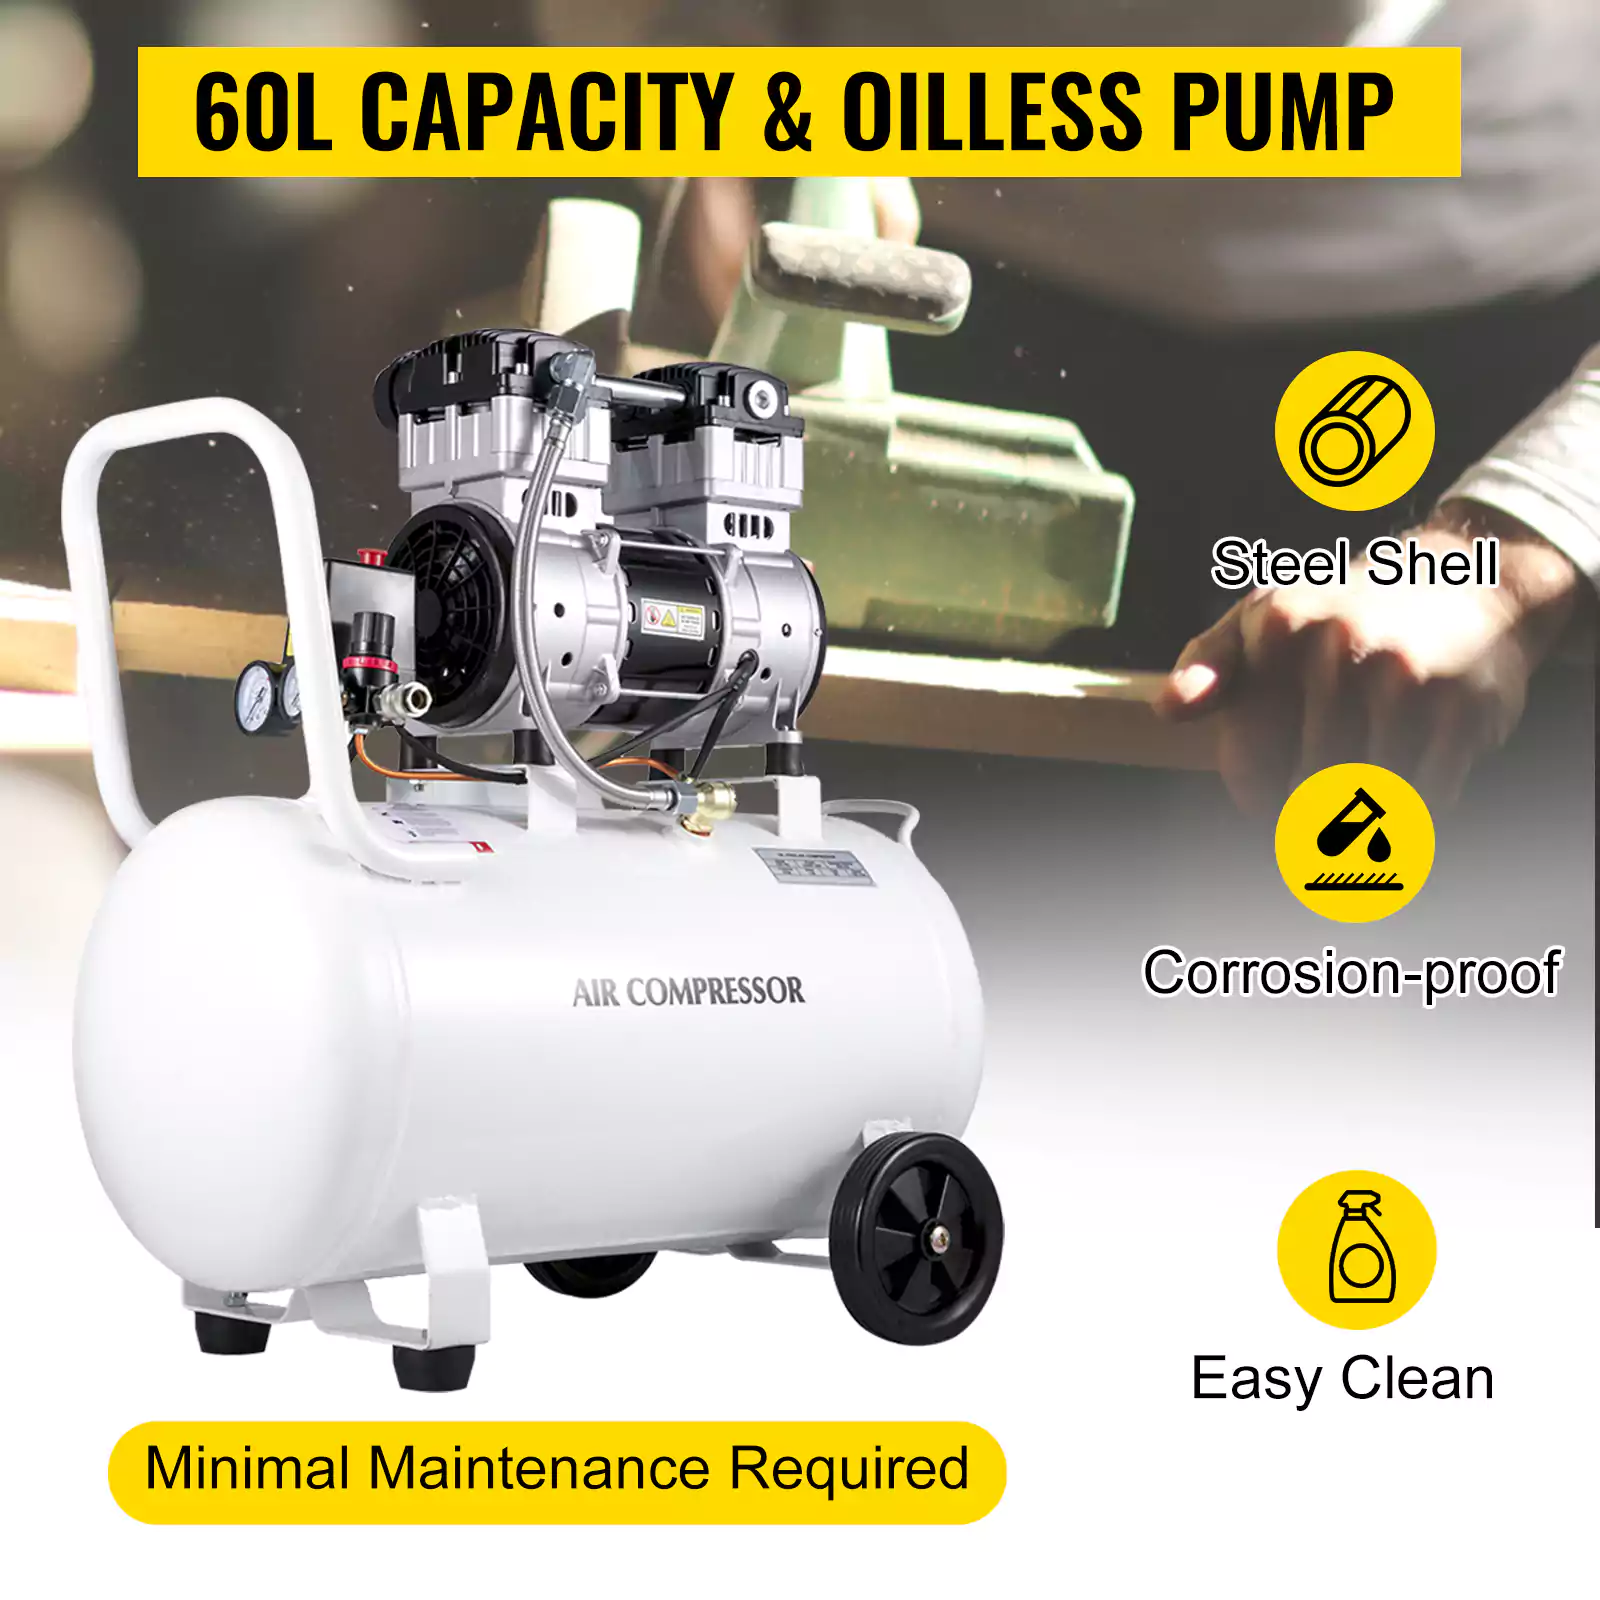 60L Capacity & Oilless Pump